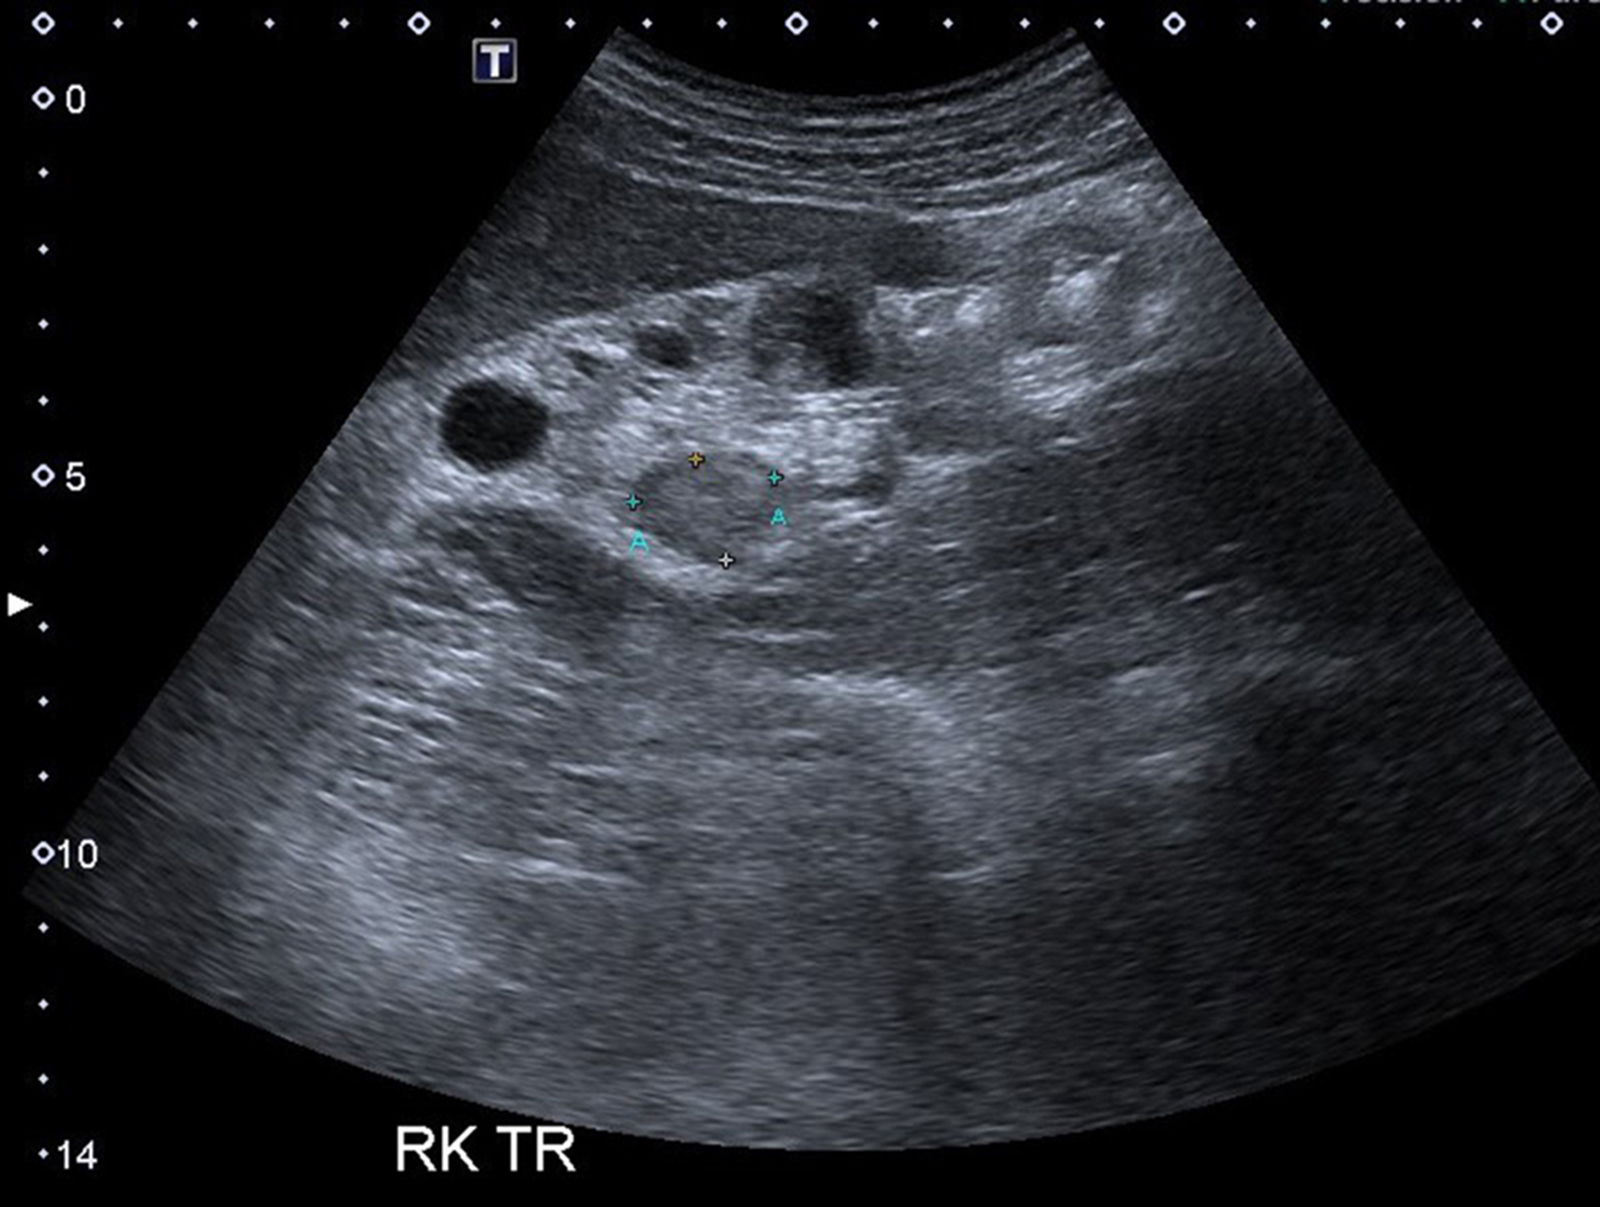 Isoechoic mass under ultrasound